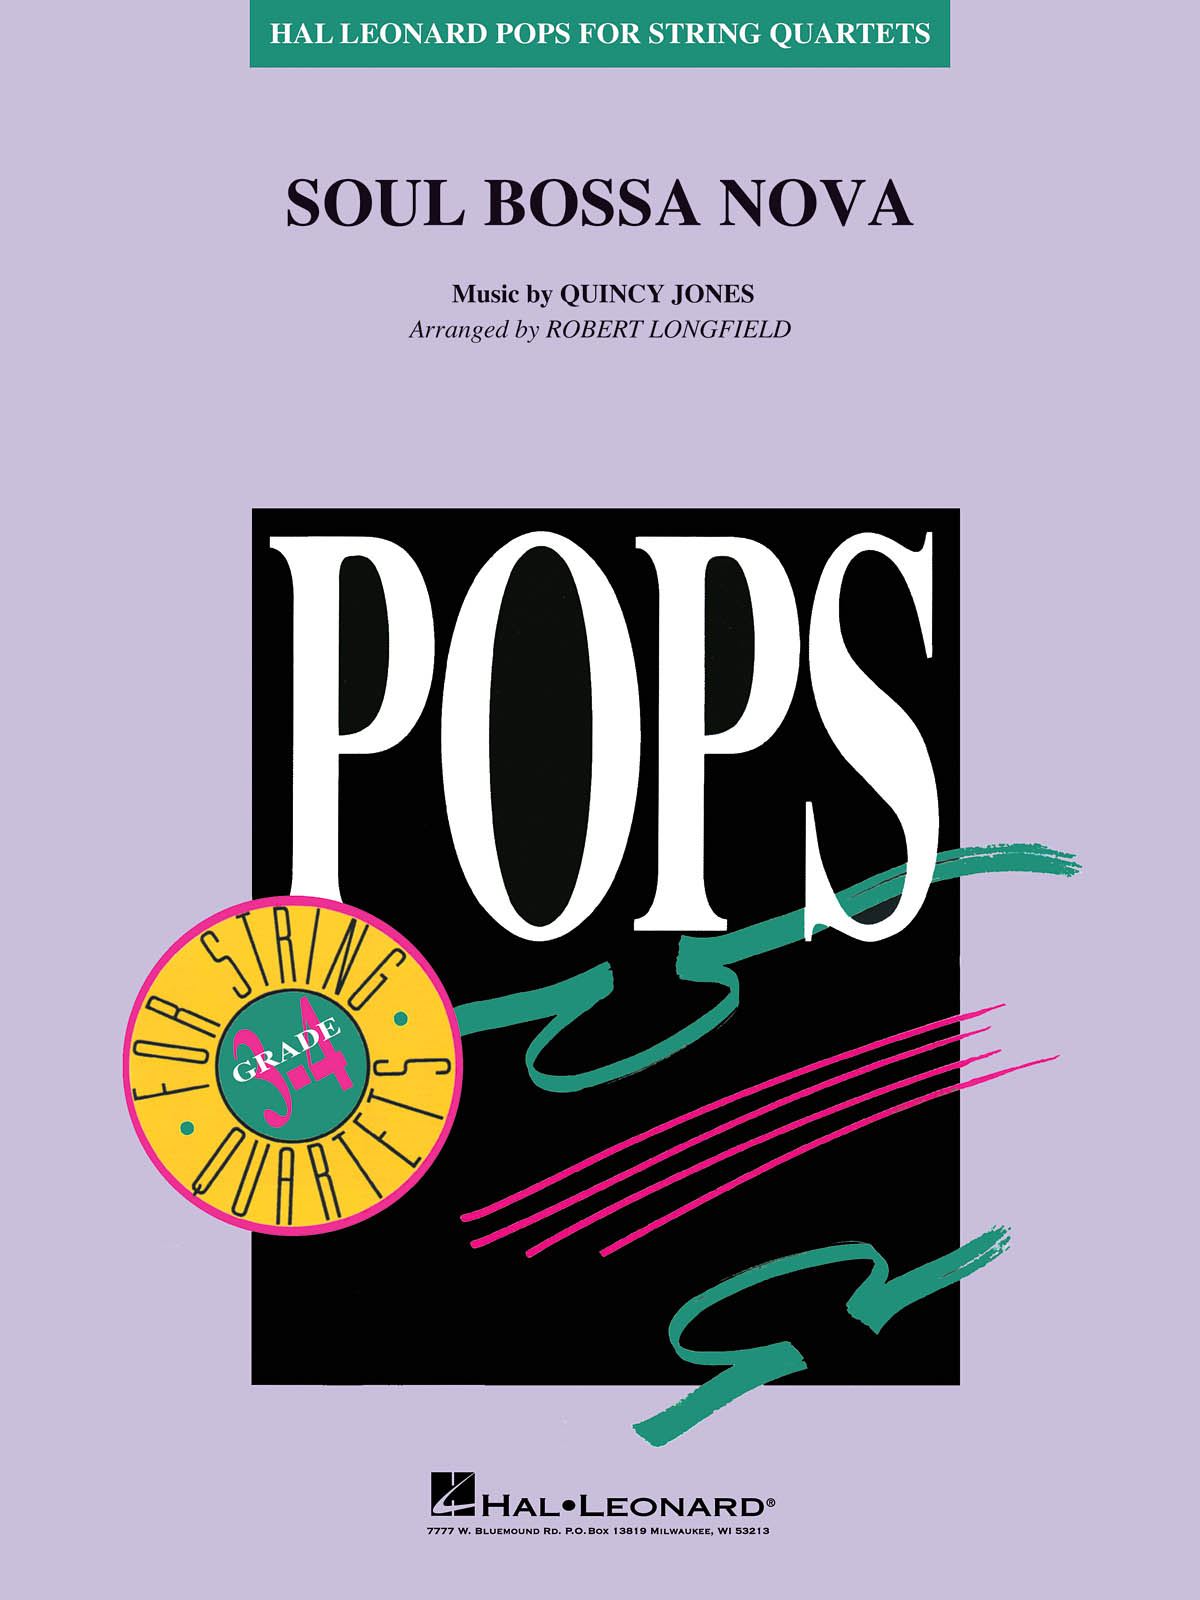 Soul Bossa Nova (JONES QUINCY)